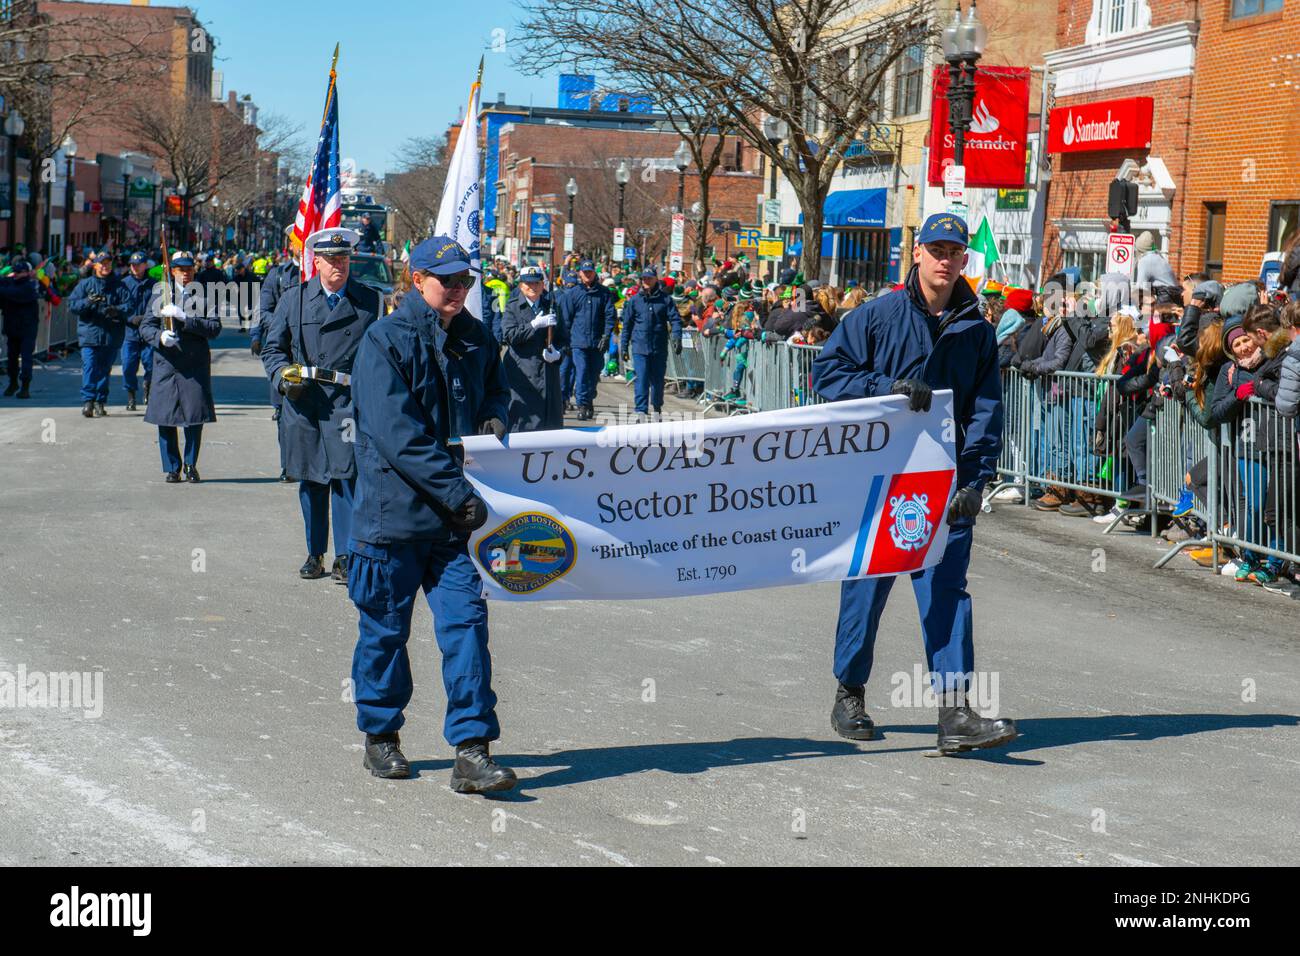 US Coast Guard march on 2018 Saint Patrick's Day Parade in Boston, Massachusetts MA, USA. Stock Photo